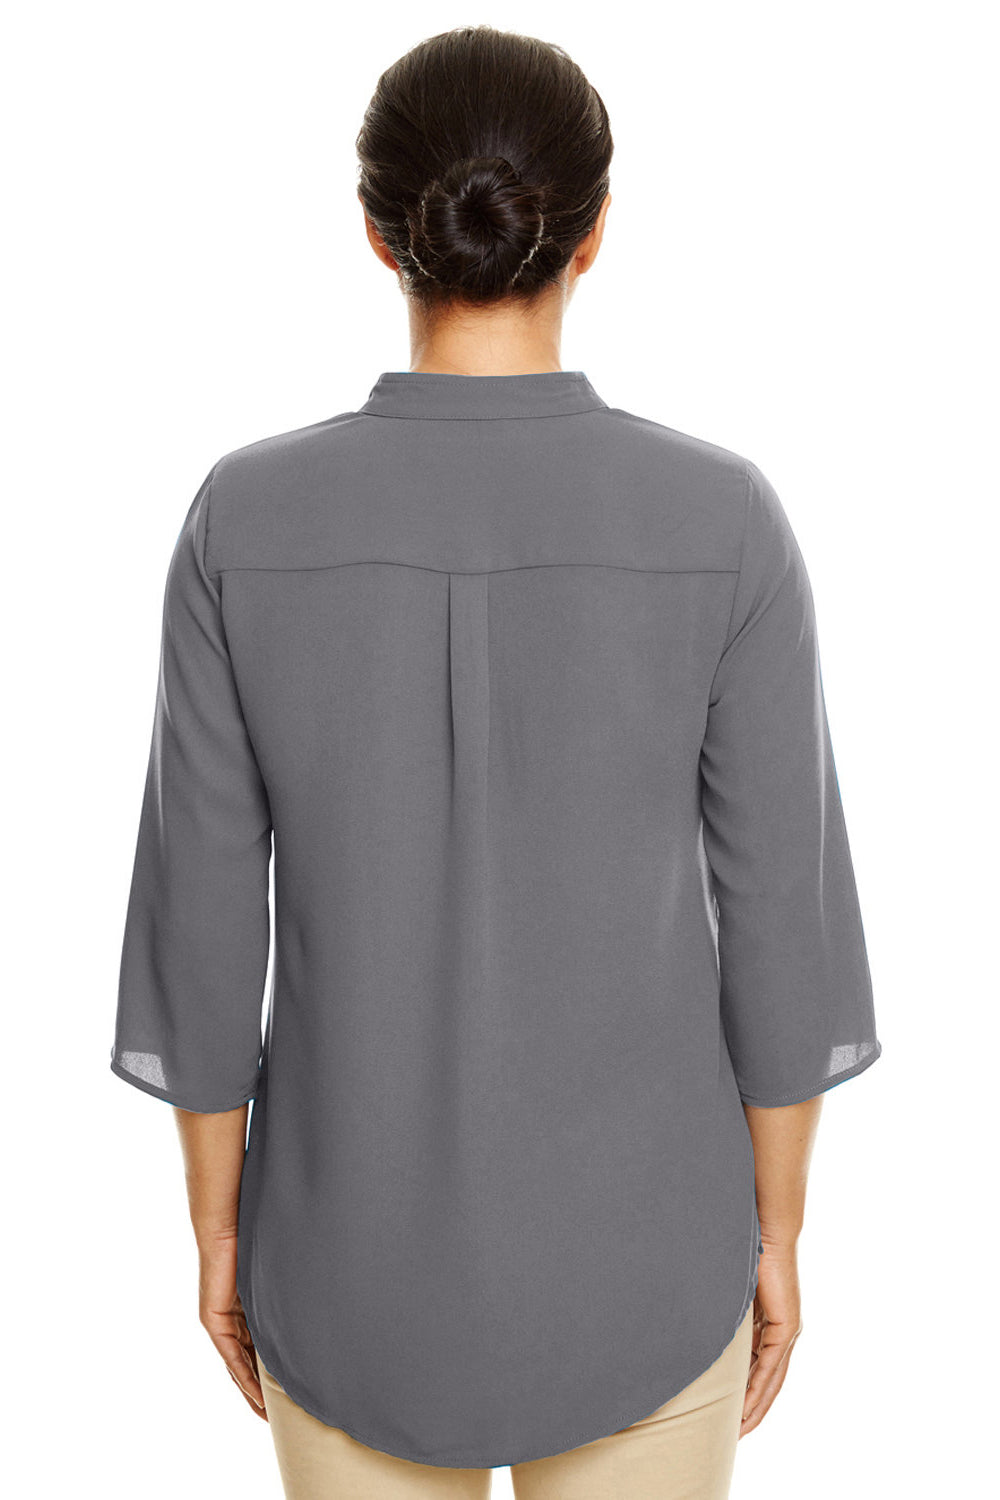 Devon & Jones DP611W Womens Perfect Fit Short Sleeve 1/4 Zip Crepe Tunic Graphite Grey Back